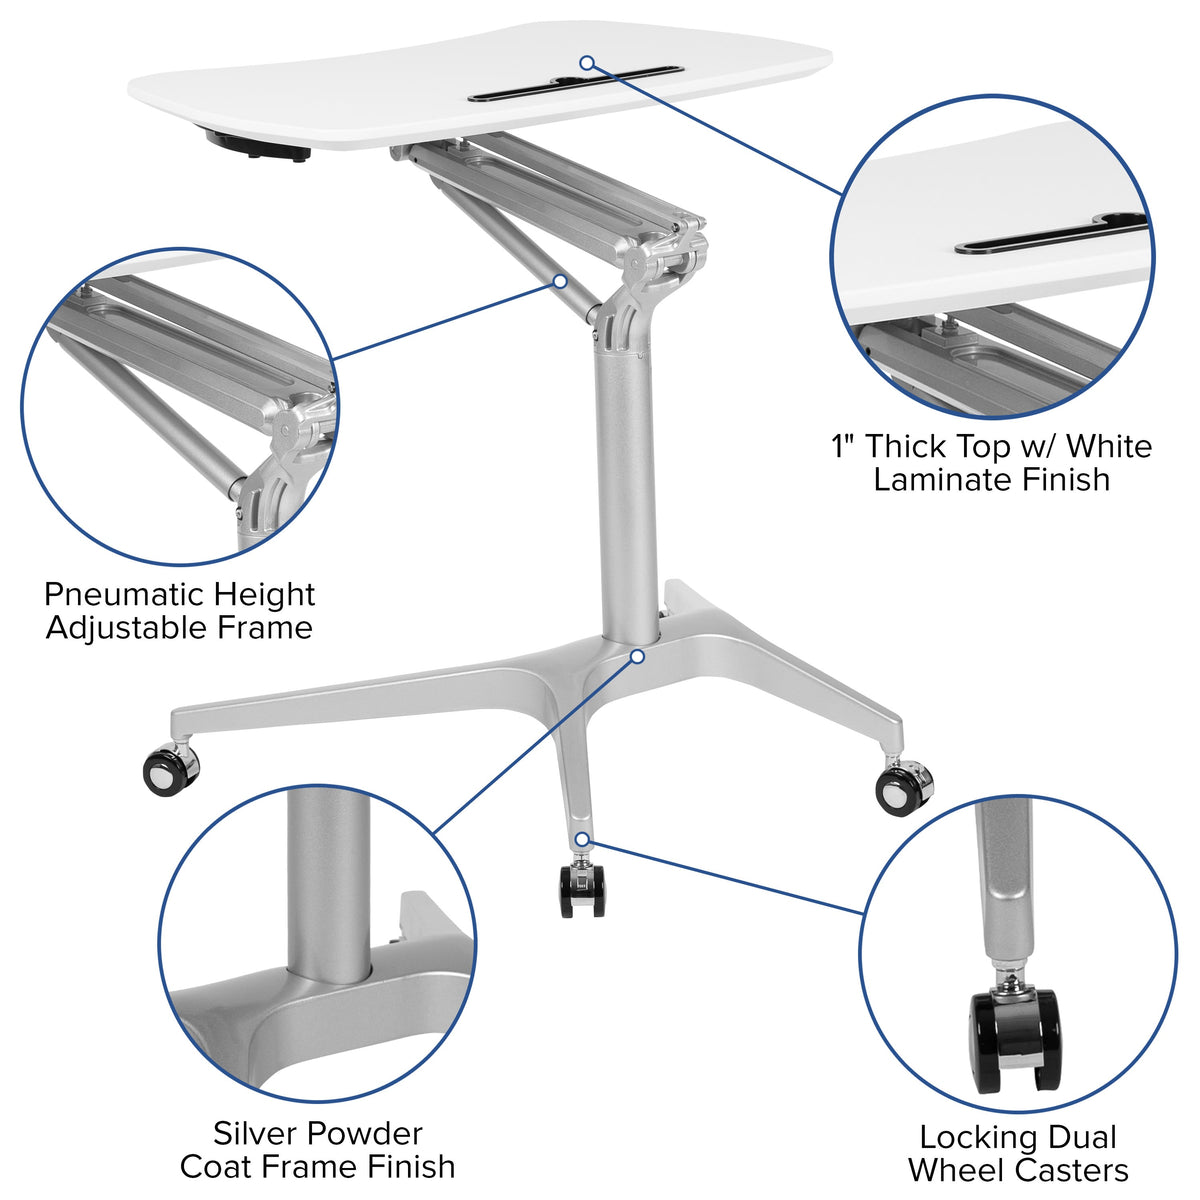 White |#| White Mobile Sit-Down, Stand-Up Ergonomic Computer Desk - Standing Desk